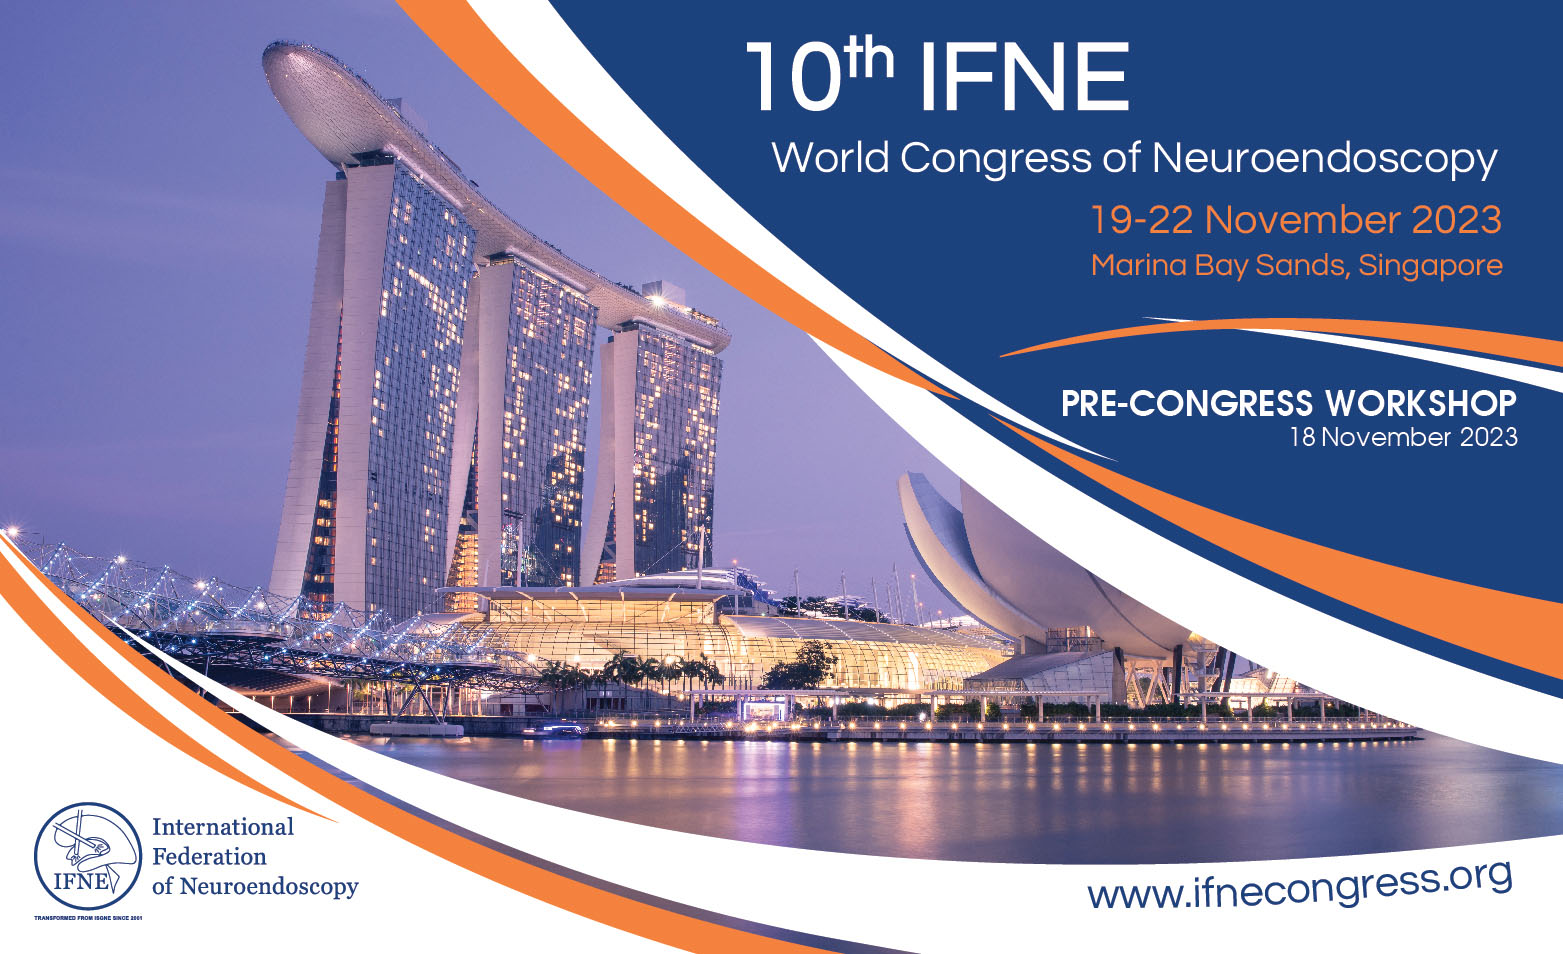 10th IFNE World Congress of Neuroendoscopy 